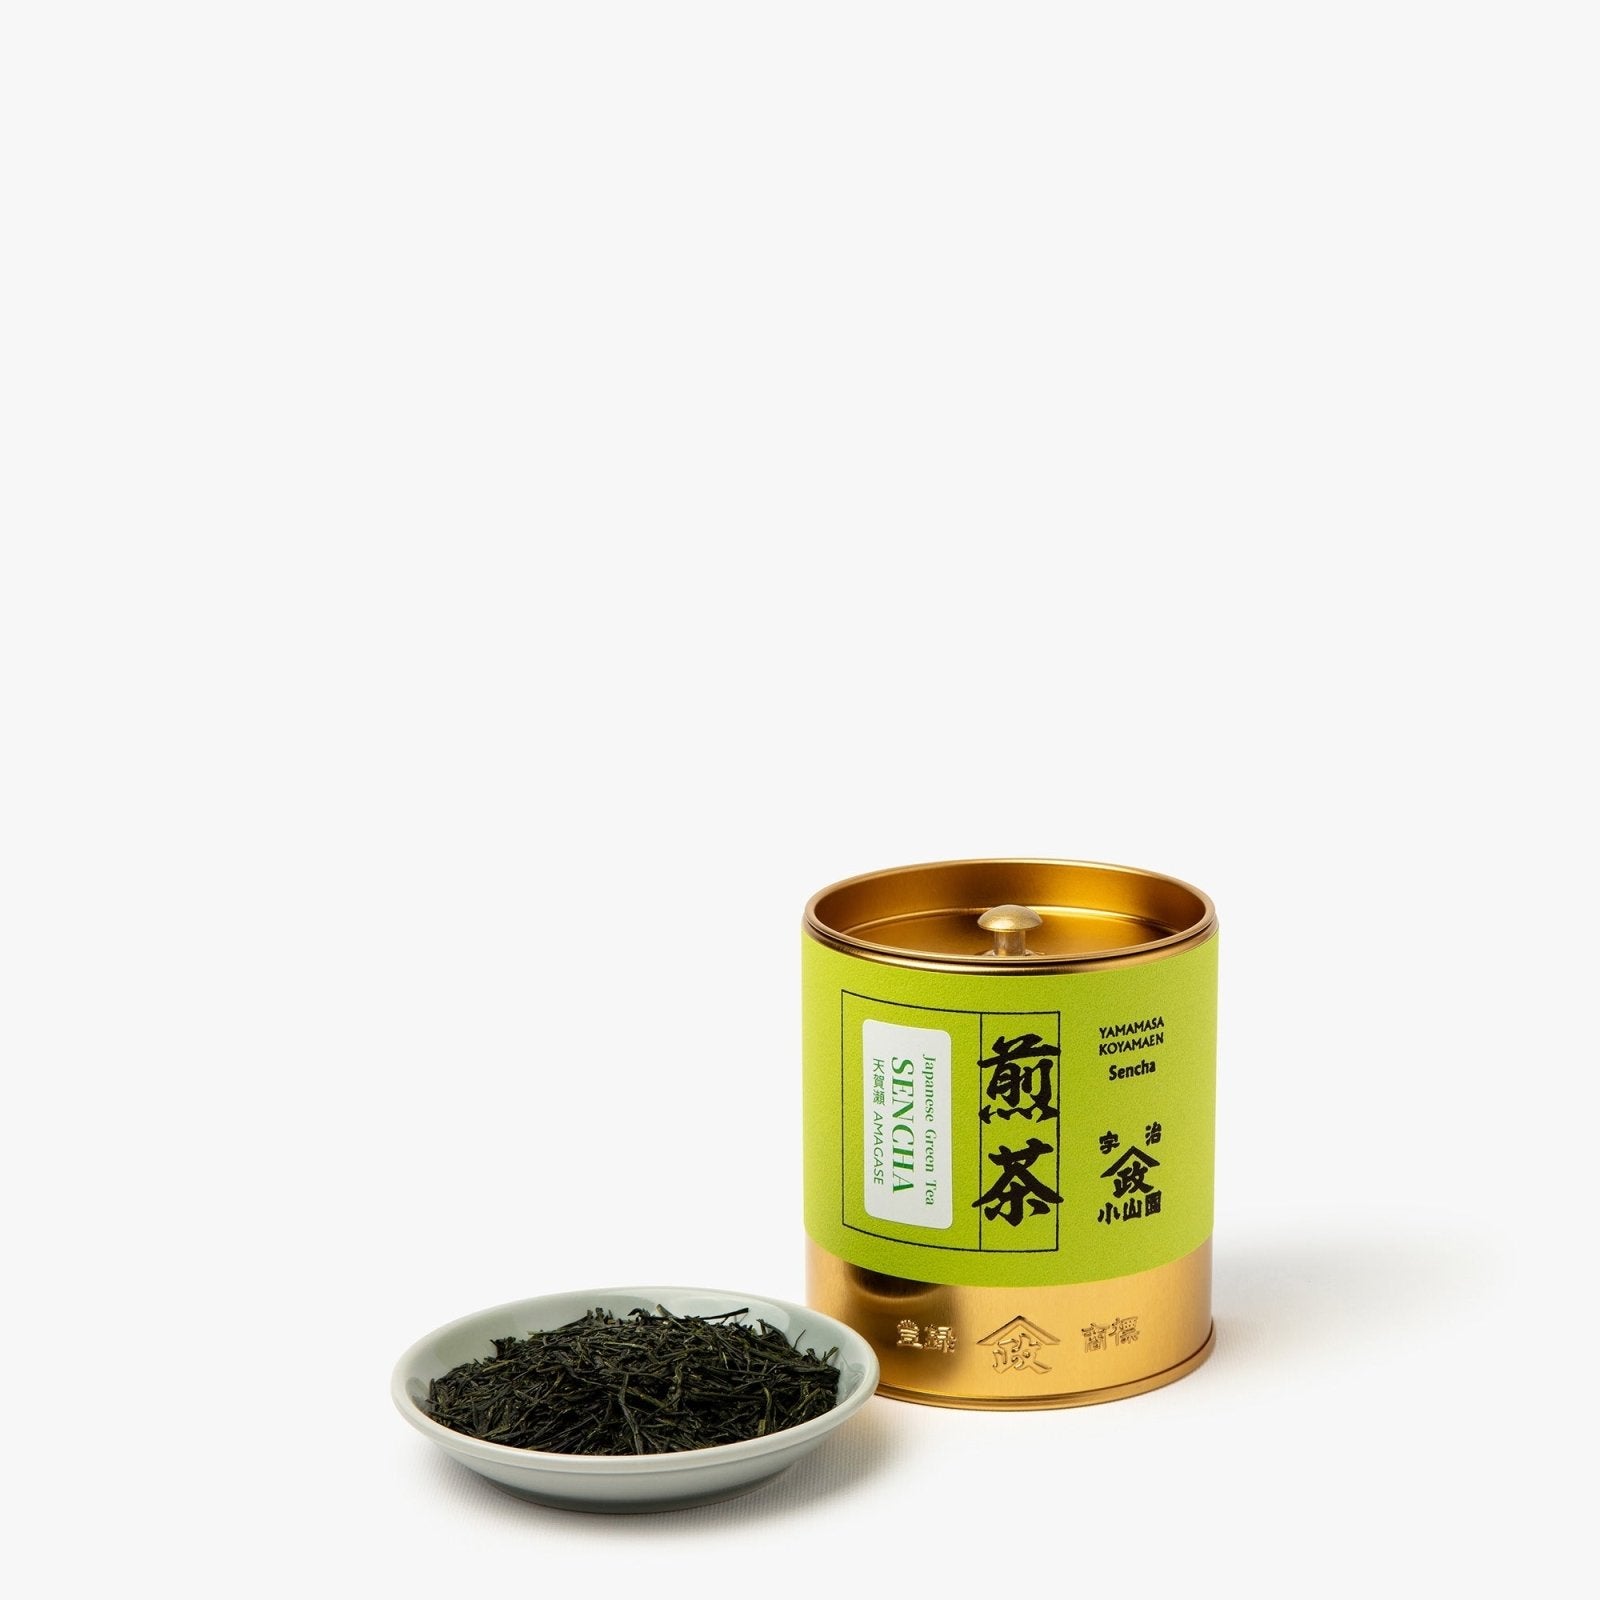 Thé vert sencha d'uji en boîte - en vrac 100g - Yamamasa Koyamaen - iRASSHAi